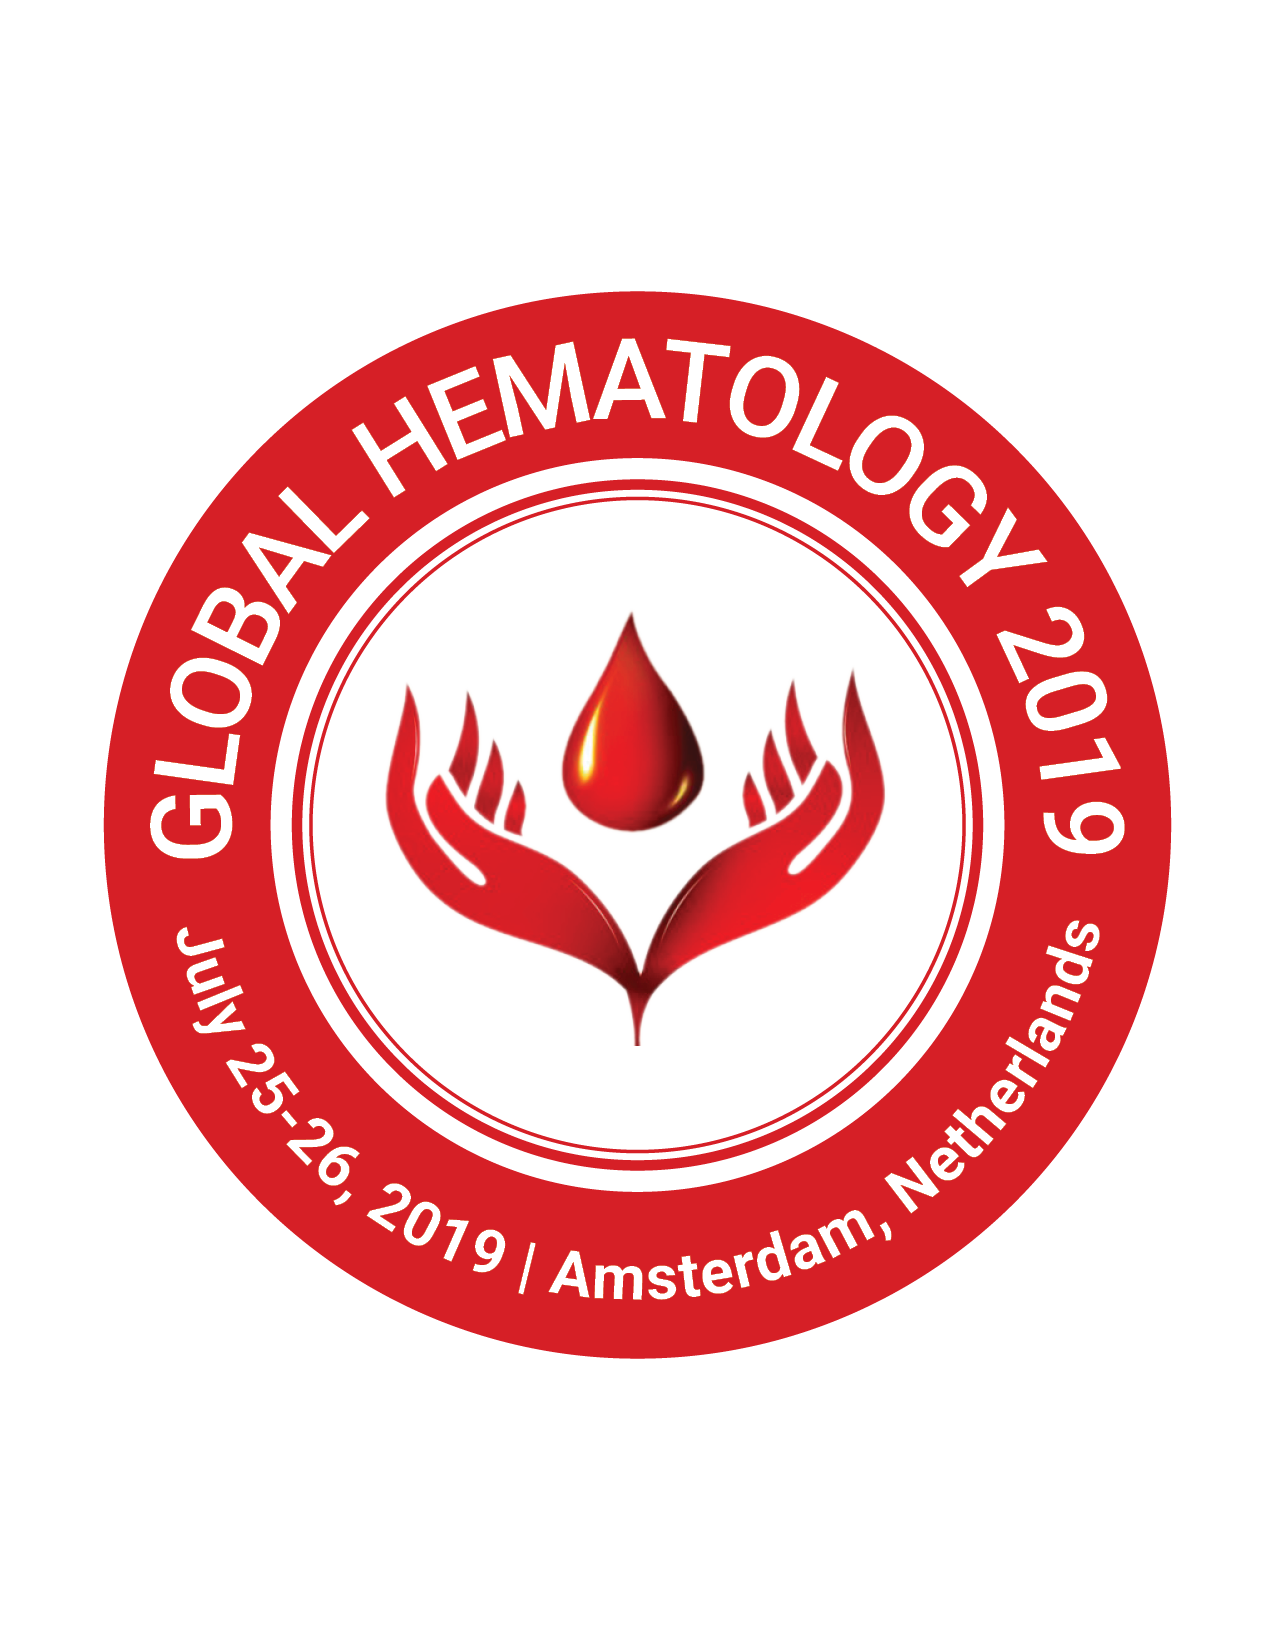 Global Hematology 2019